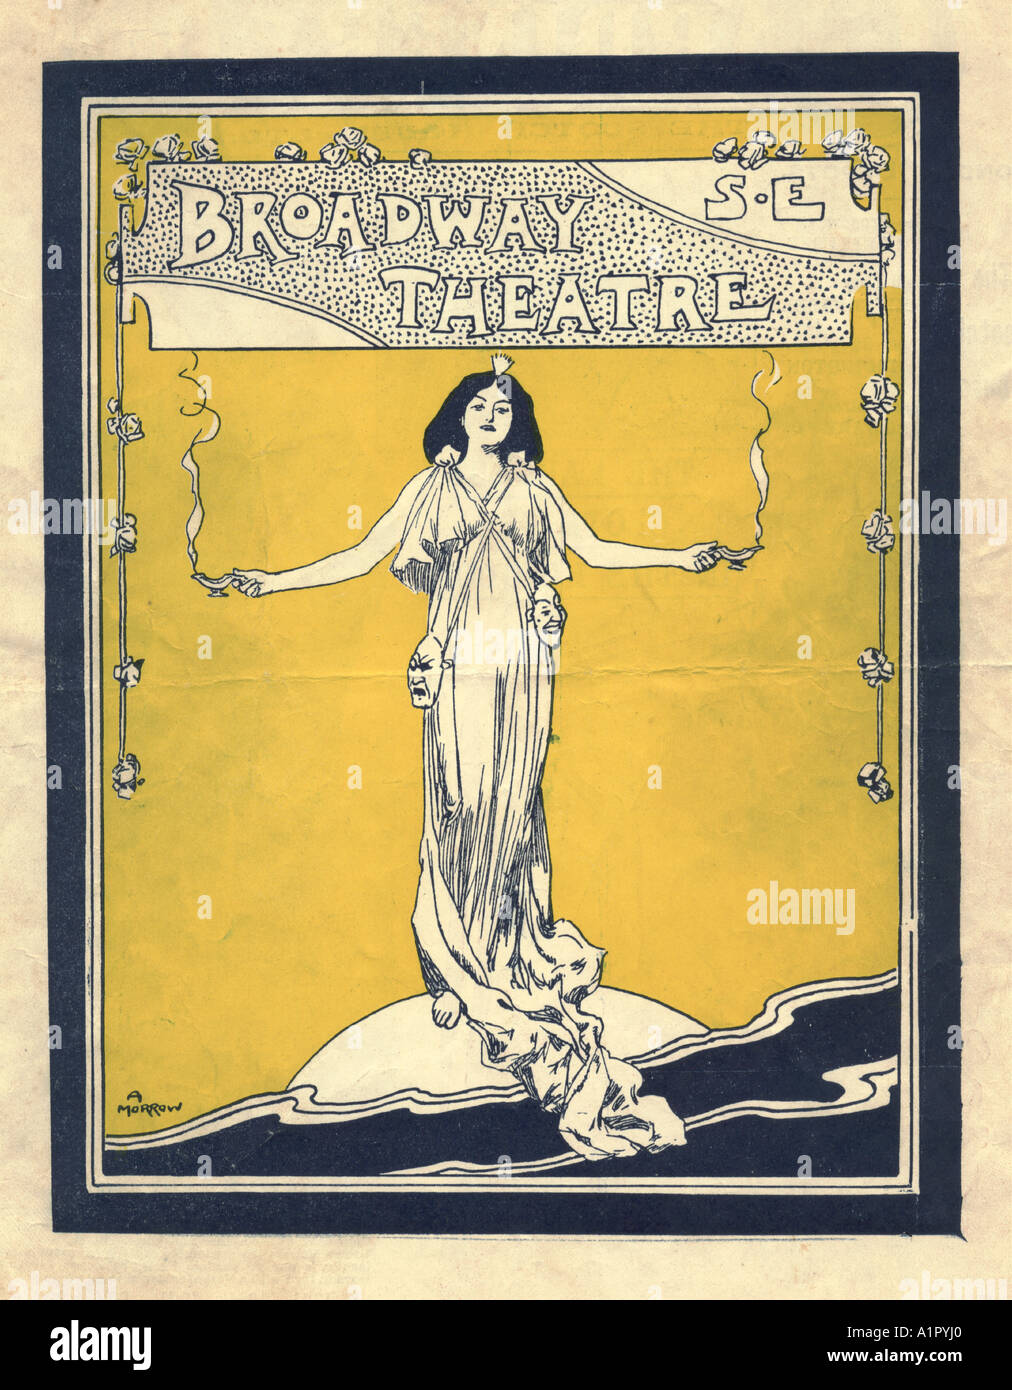 Broadway Theatre, London, programme 1876 Stock Photo